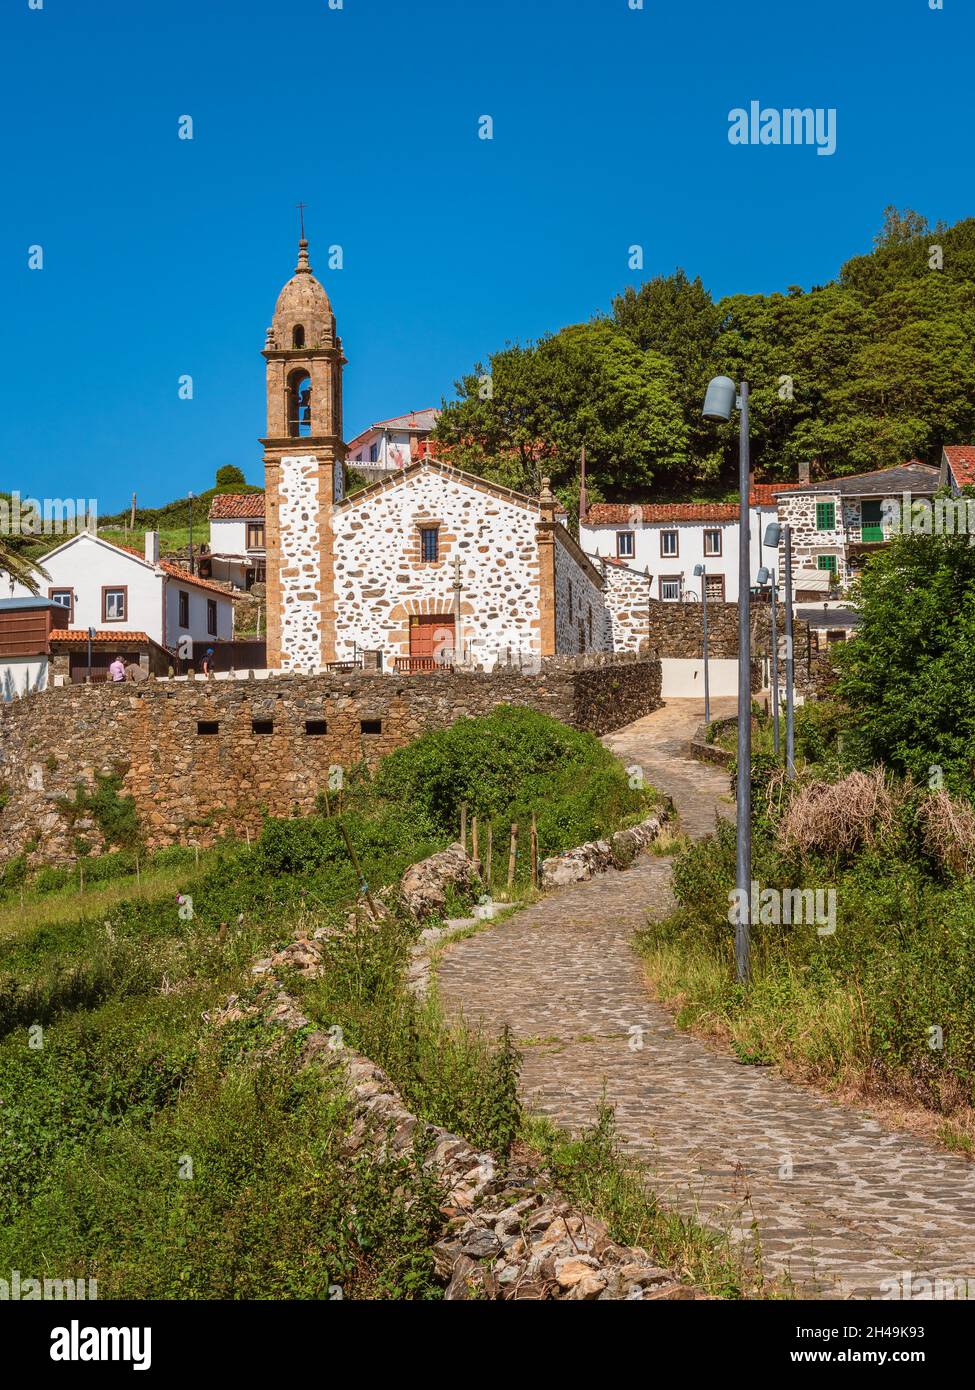 Bella chiesa contro il cielo blu. Vista del santuario di San Andrés de Teixido in Galizia, Spagna Foto Stock